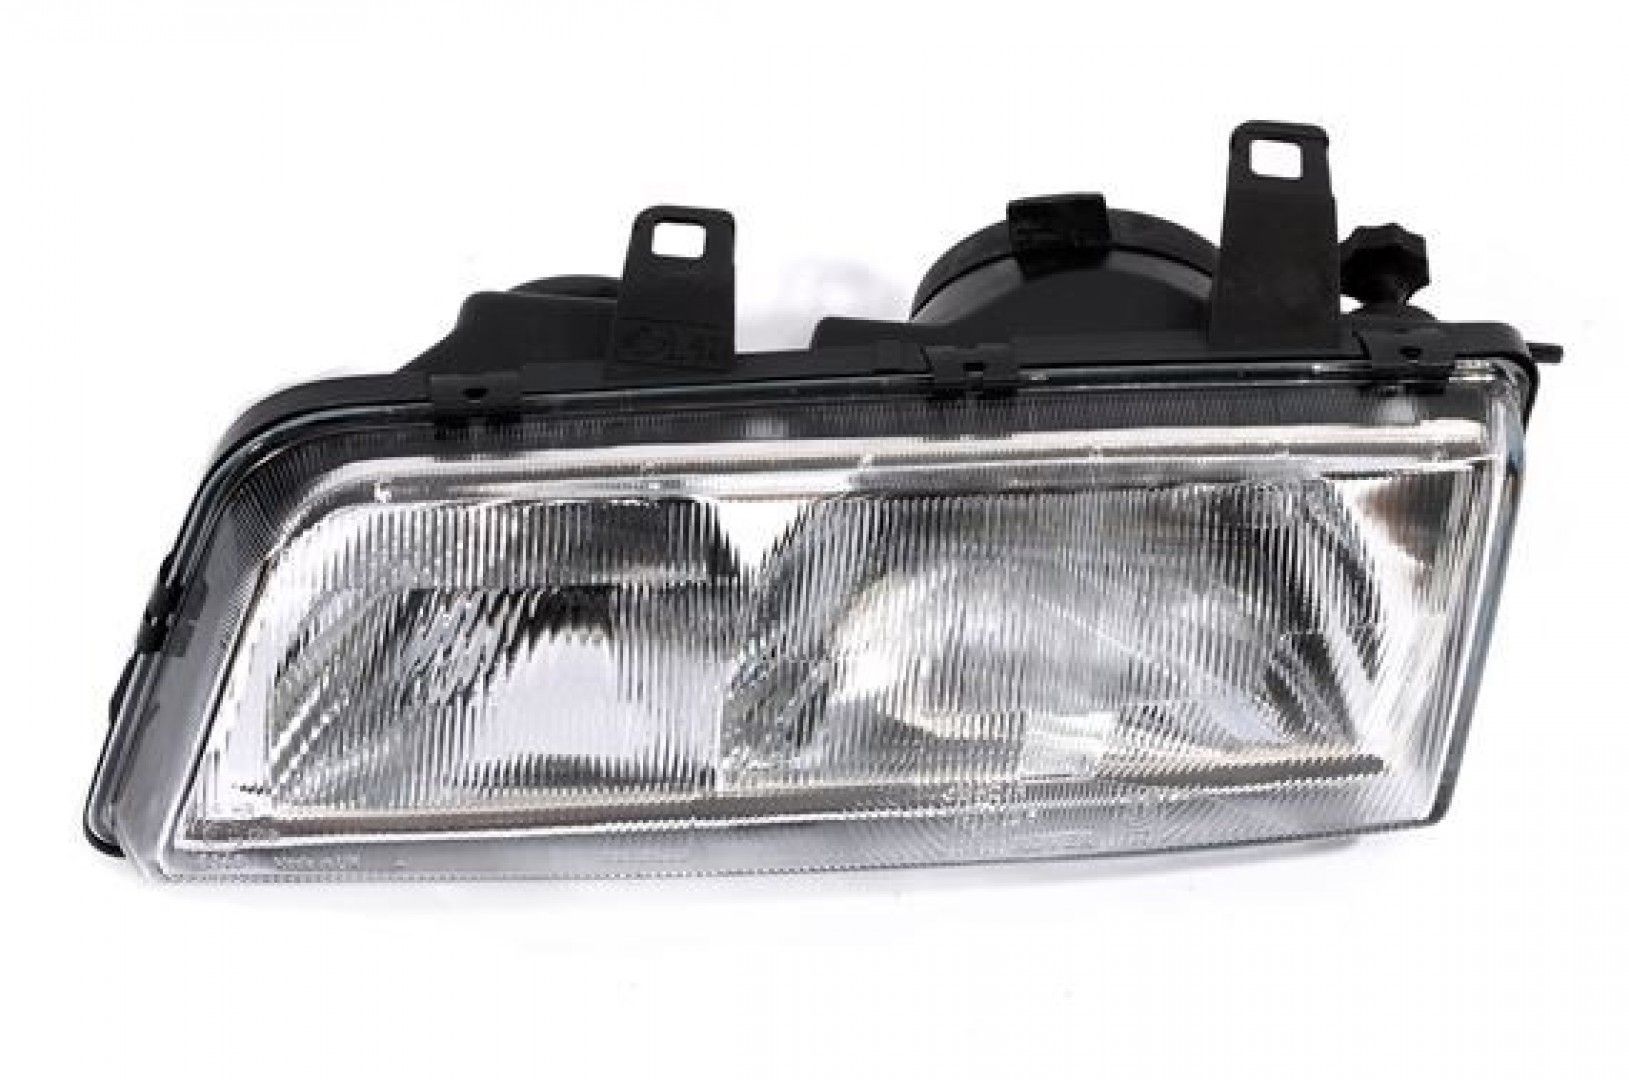 Headlamp assy-front lighting - LH 800 Genuine MG Rover XBC10281 XBC10143 XBC1028